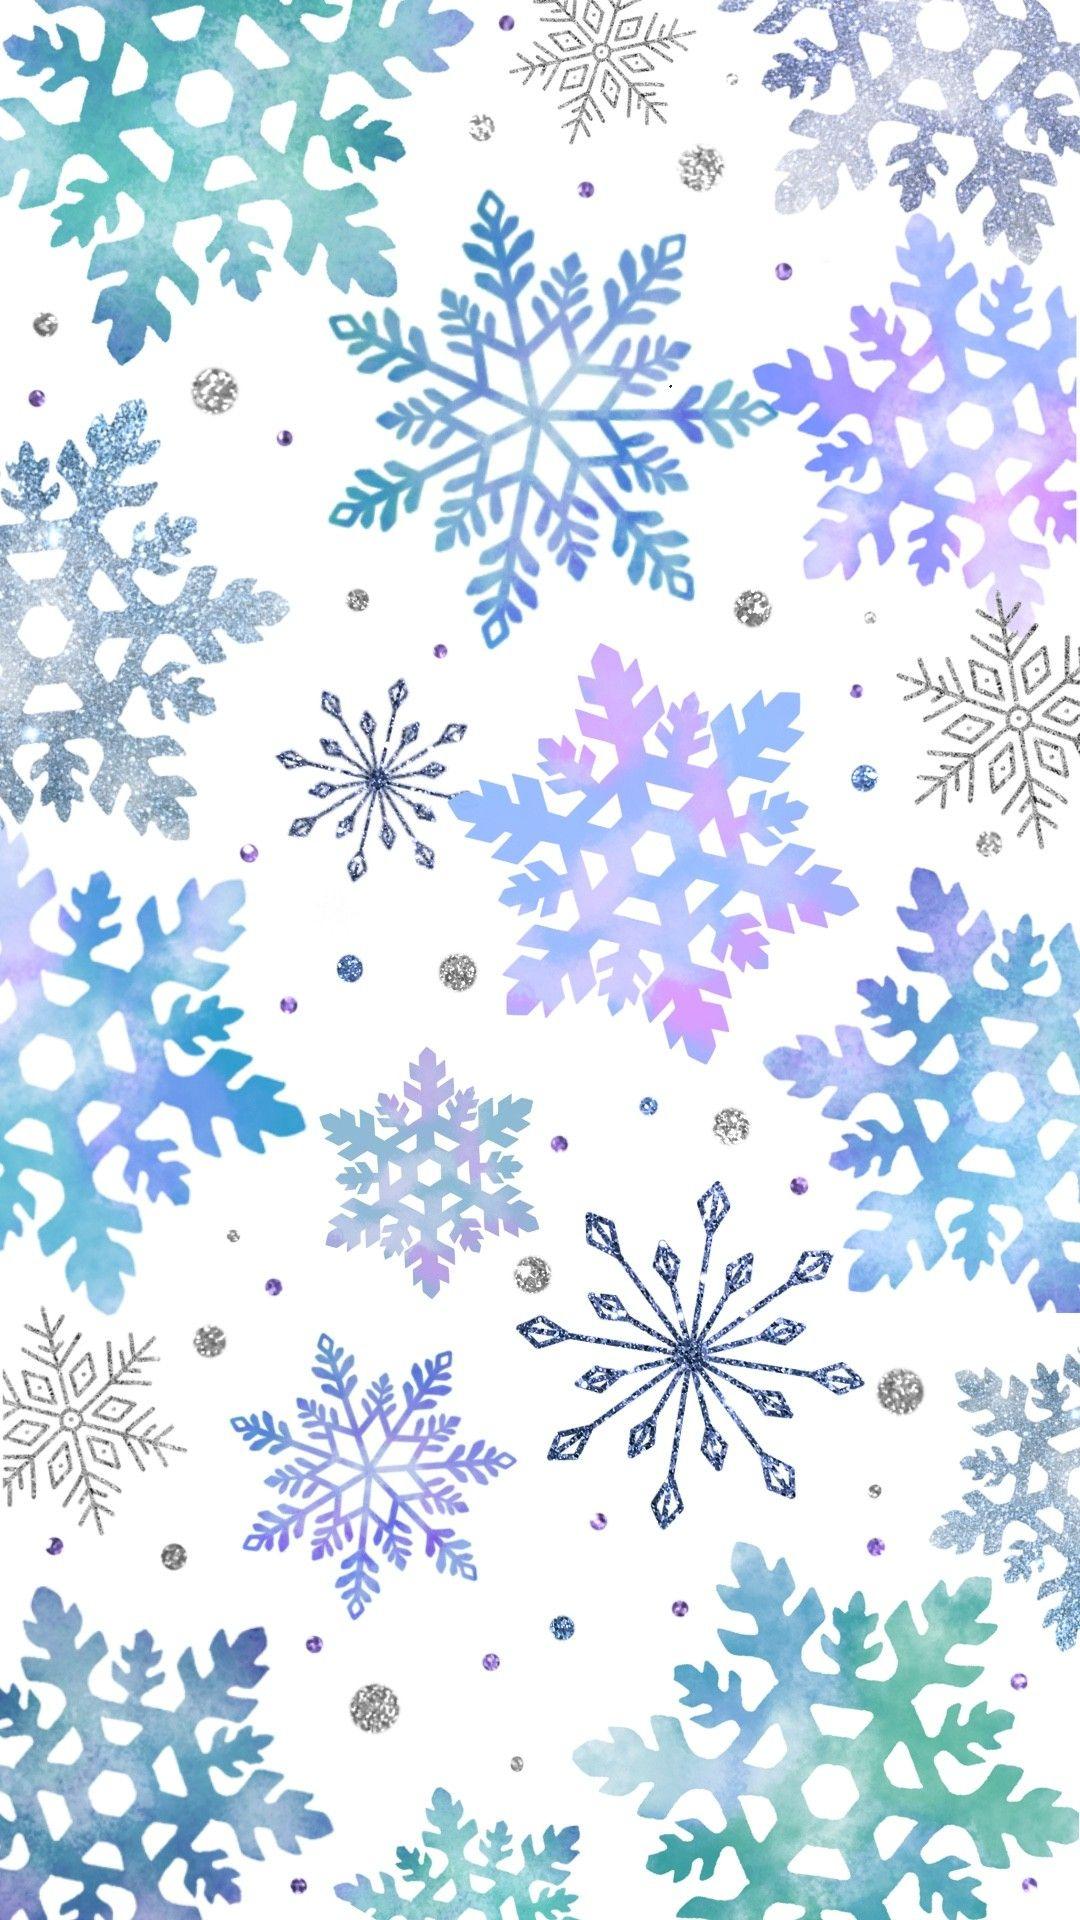 Free Snowflake Snow Beautiful Background Images H5 Snowflake Background  Photo Background PNG and Vectors  Snowflake background Snowflake wallpaper  Xmas wallpaper